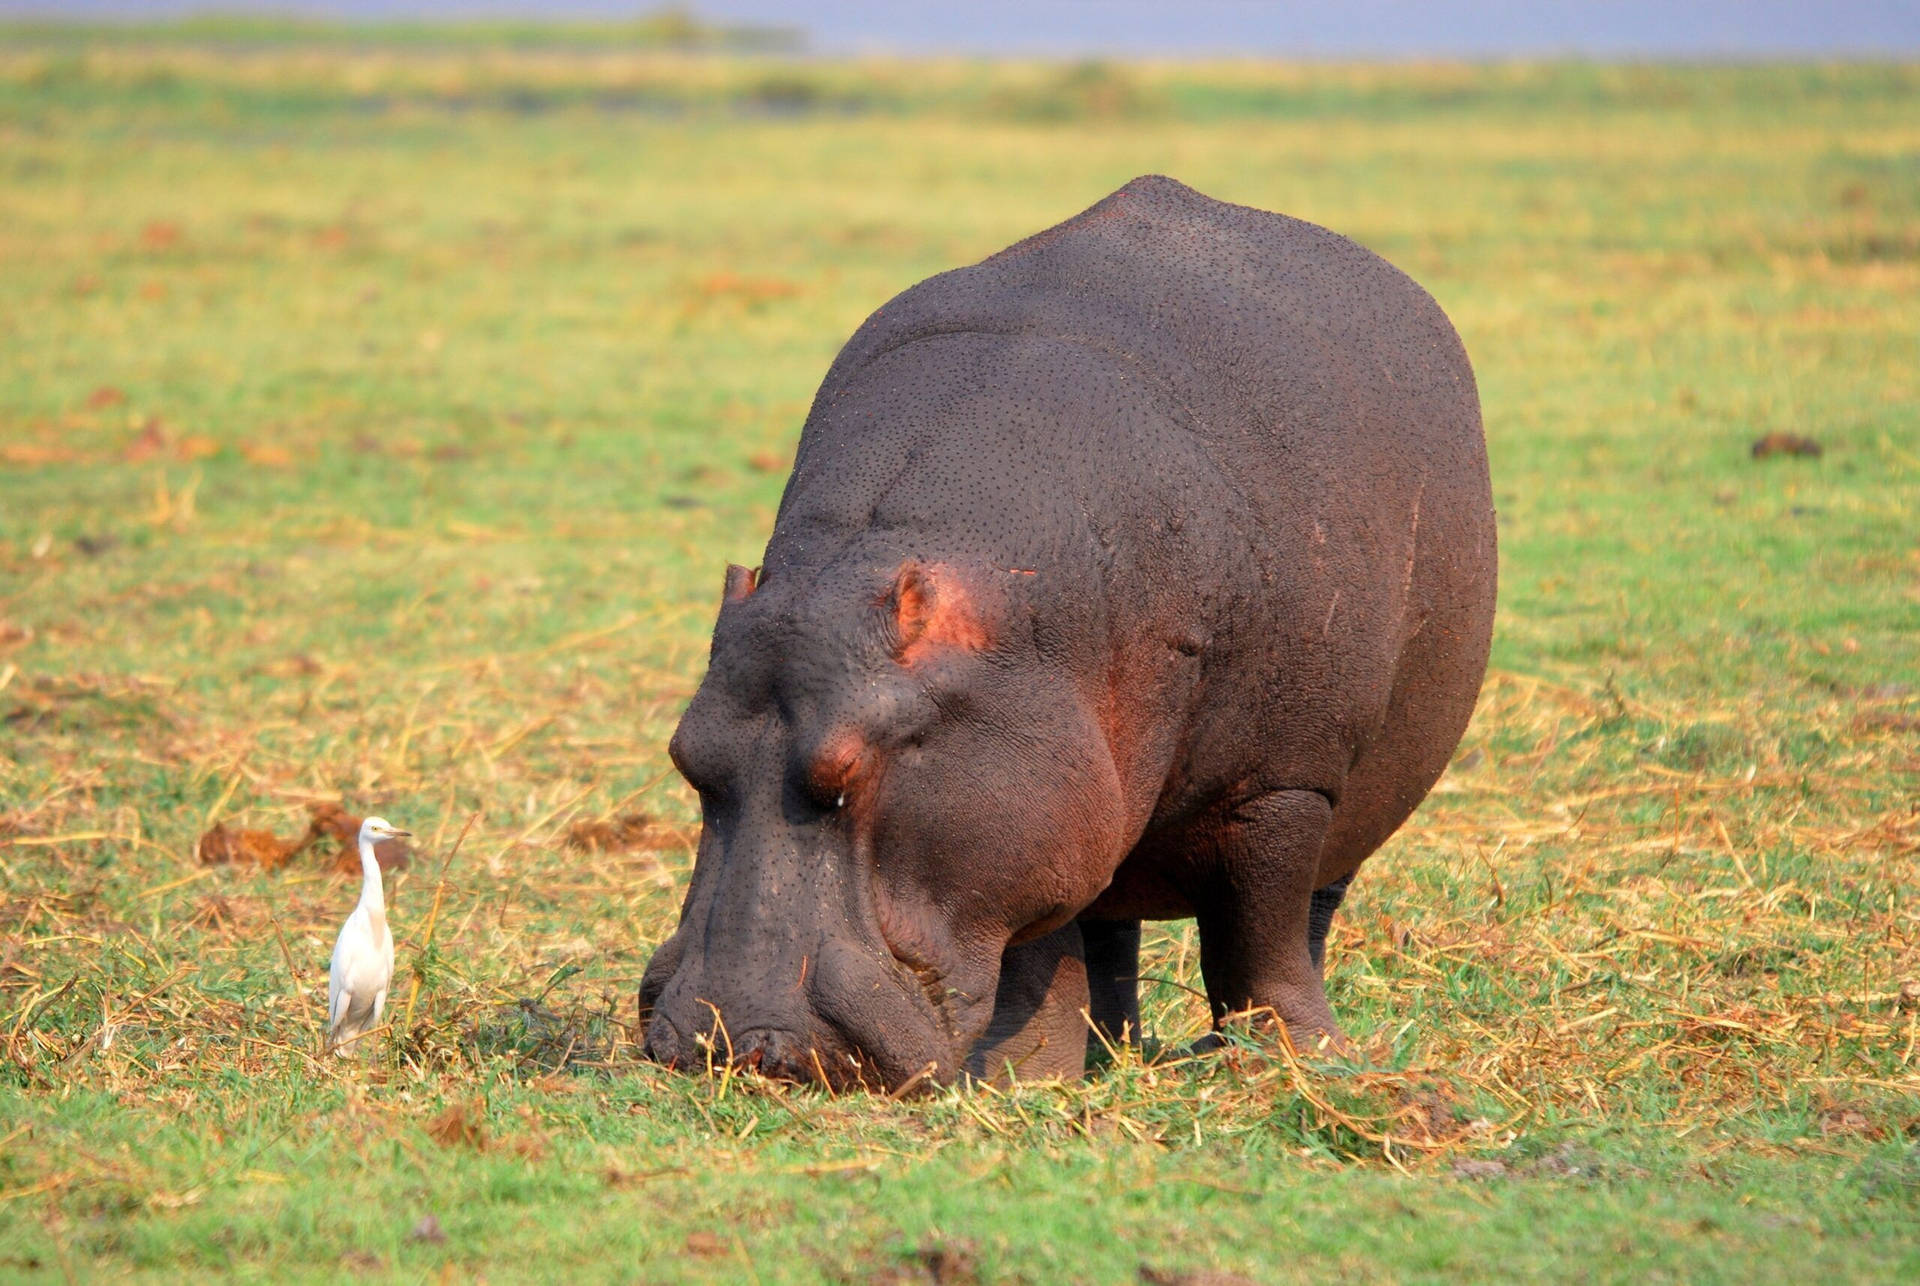 Hippopotamus Grazing On Grass Field Background